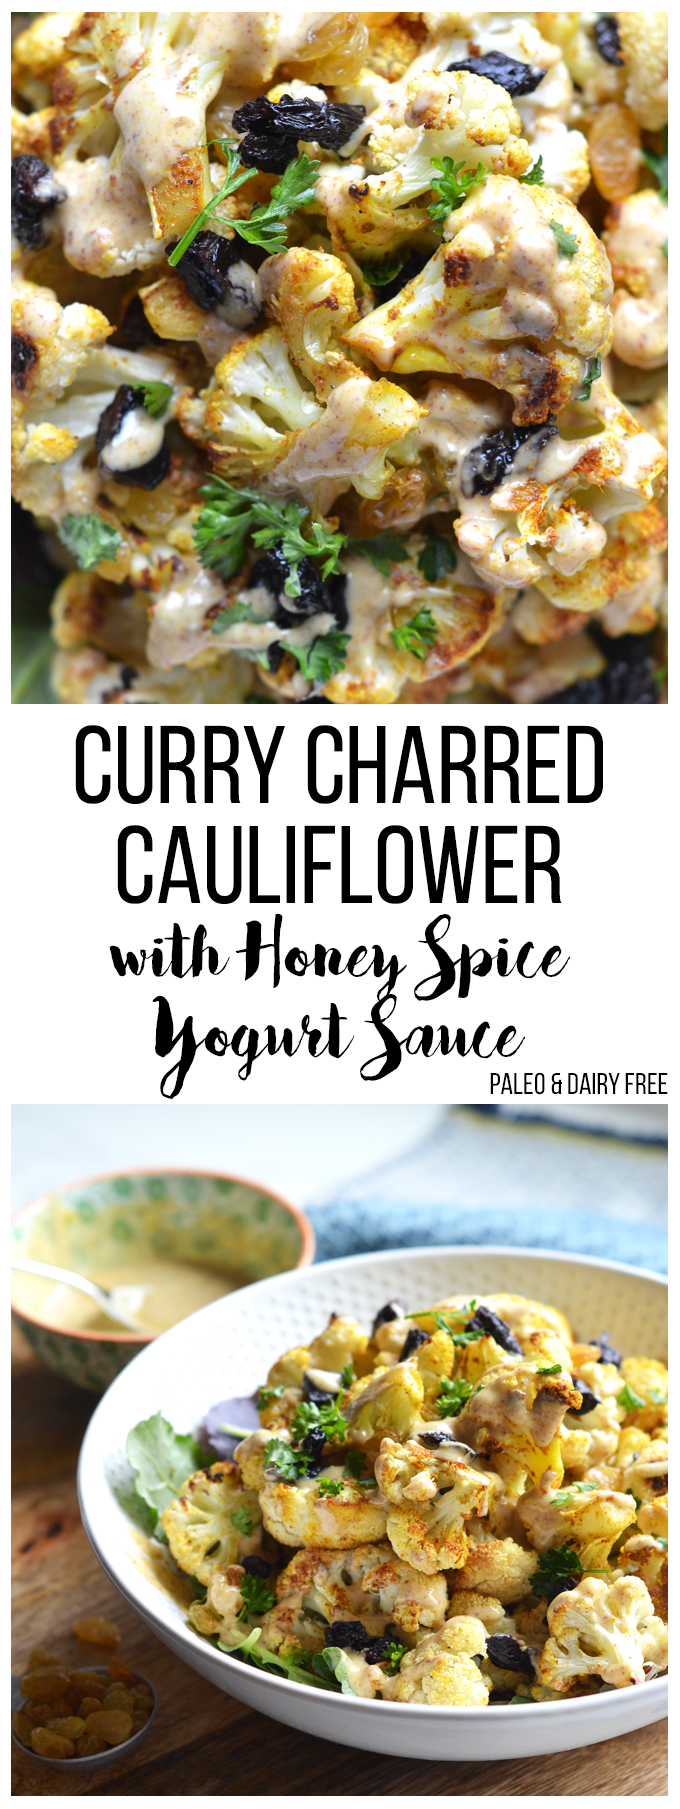 This Curry Charred Cauliflower with Honey Spice Yogurt Sauce is made Paleo & dairy free with almond milk yogurt and lots of cinnamon, turmeric and curry powder!